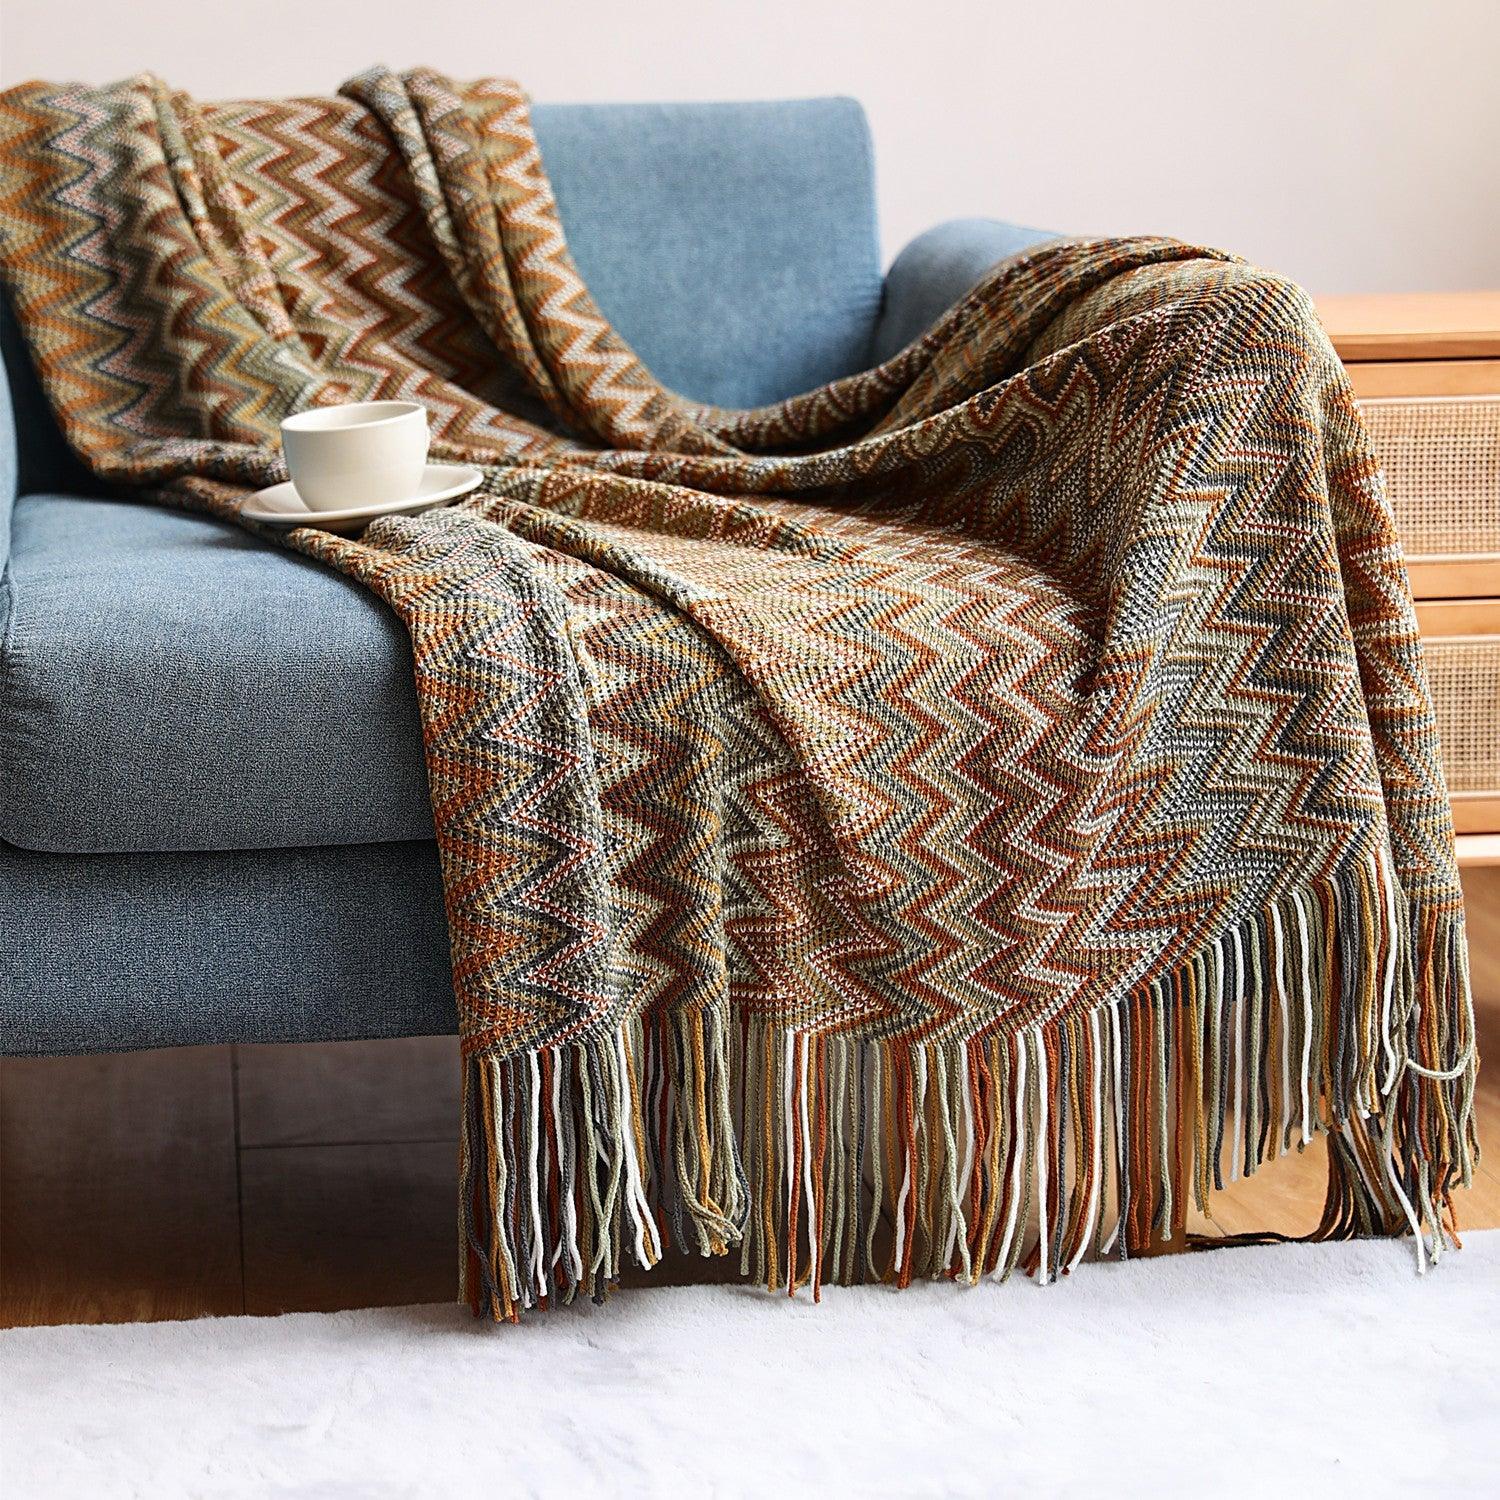 Bohemian Sofa Blanket Cross Border Knitting Blanket Office Nap Blanket Air Conditioning BlanketYellow 127x152cm 